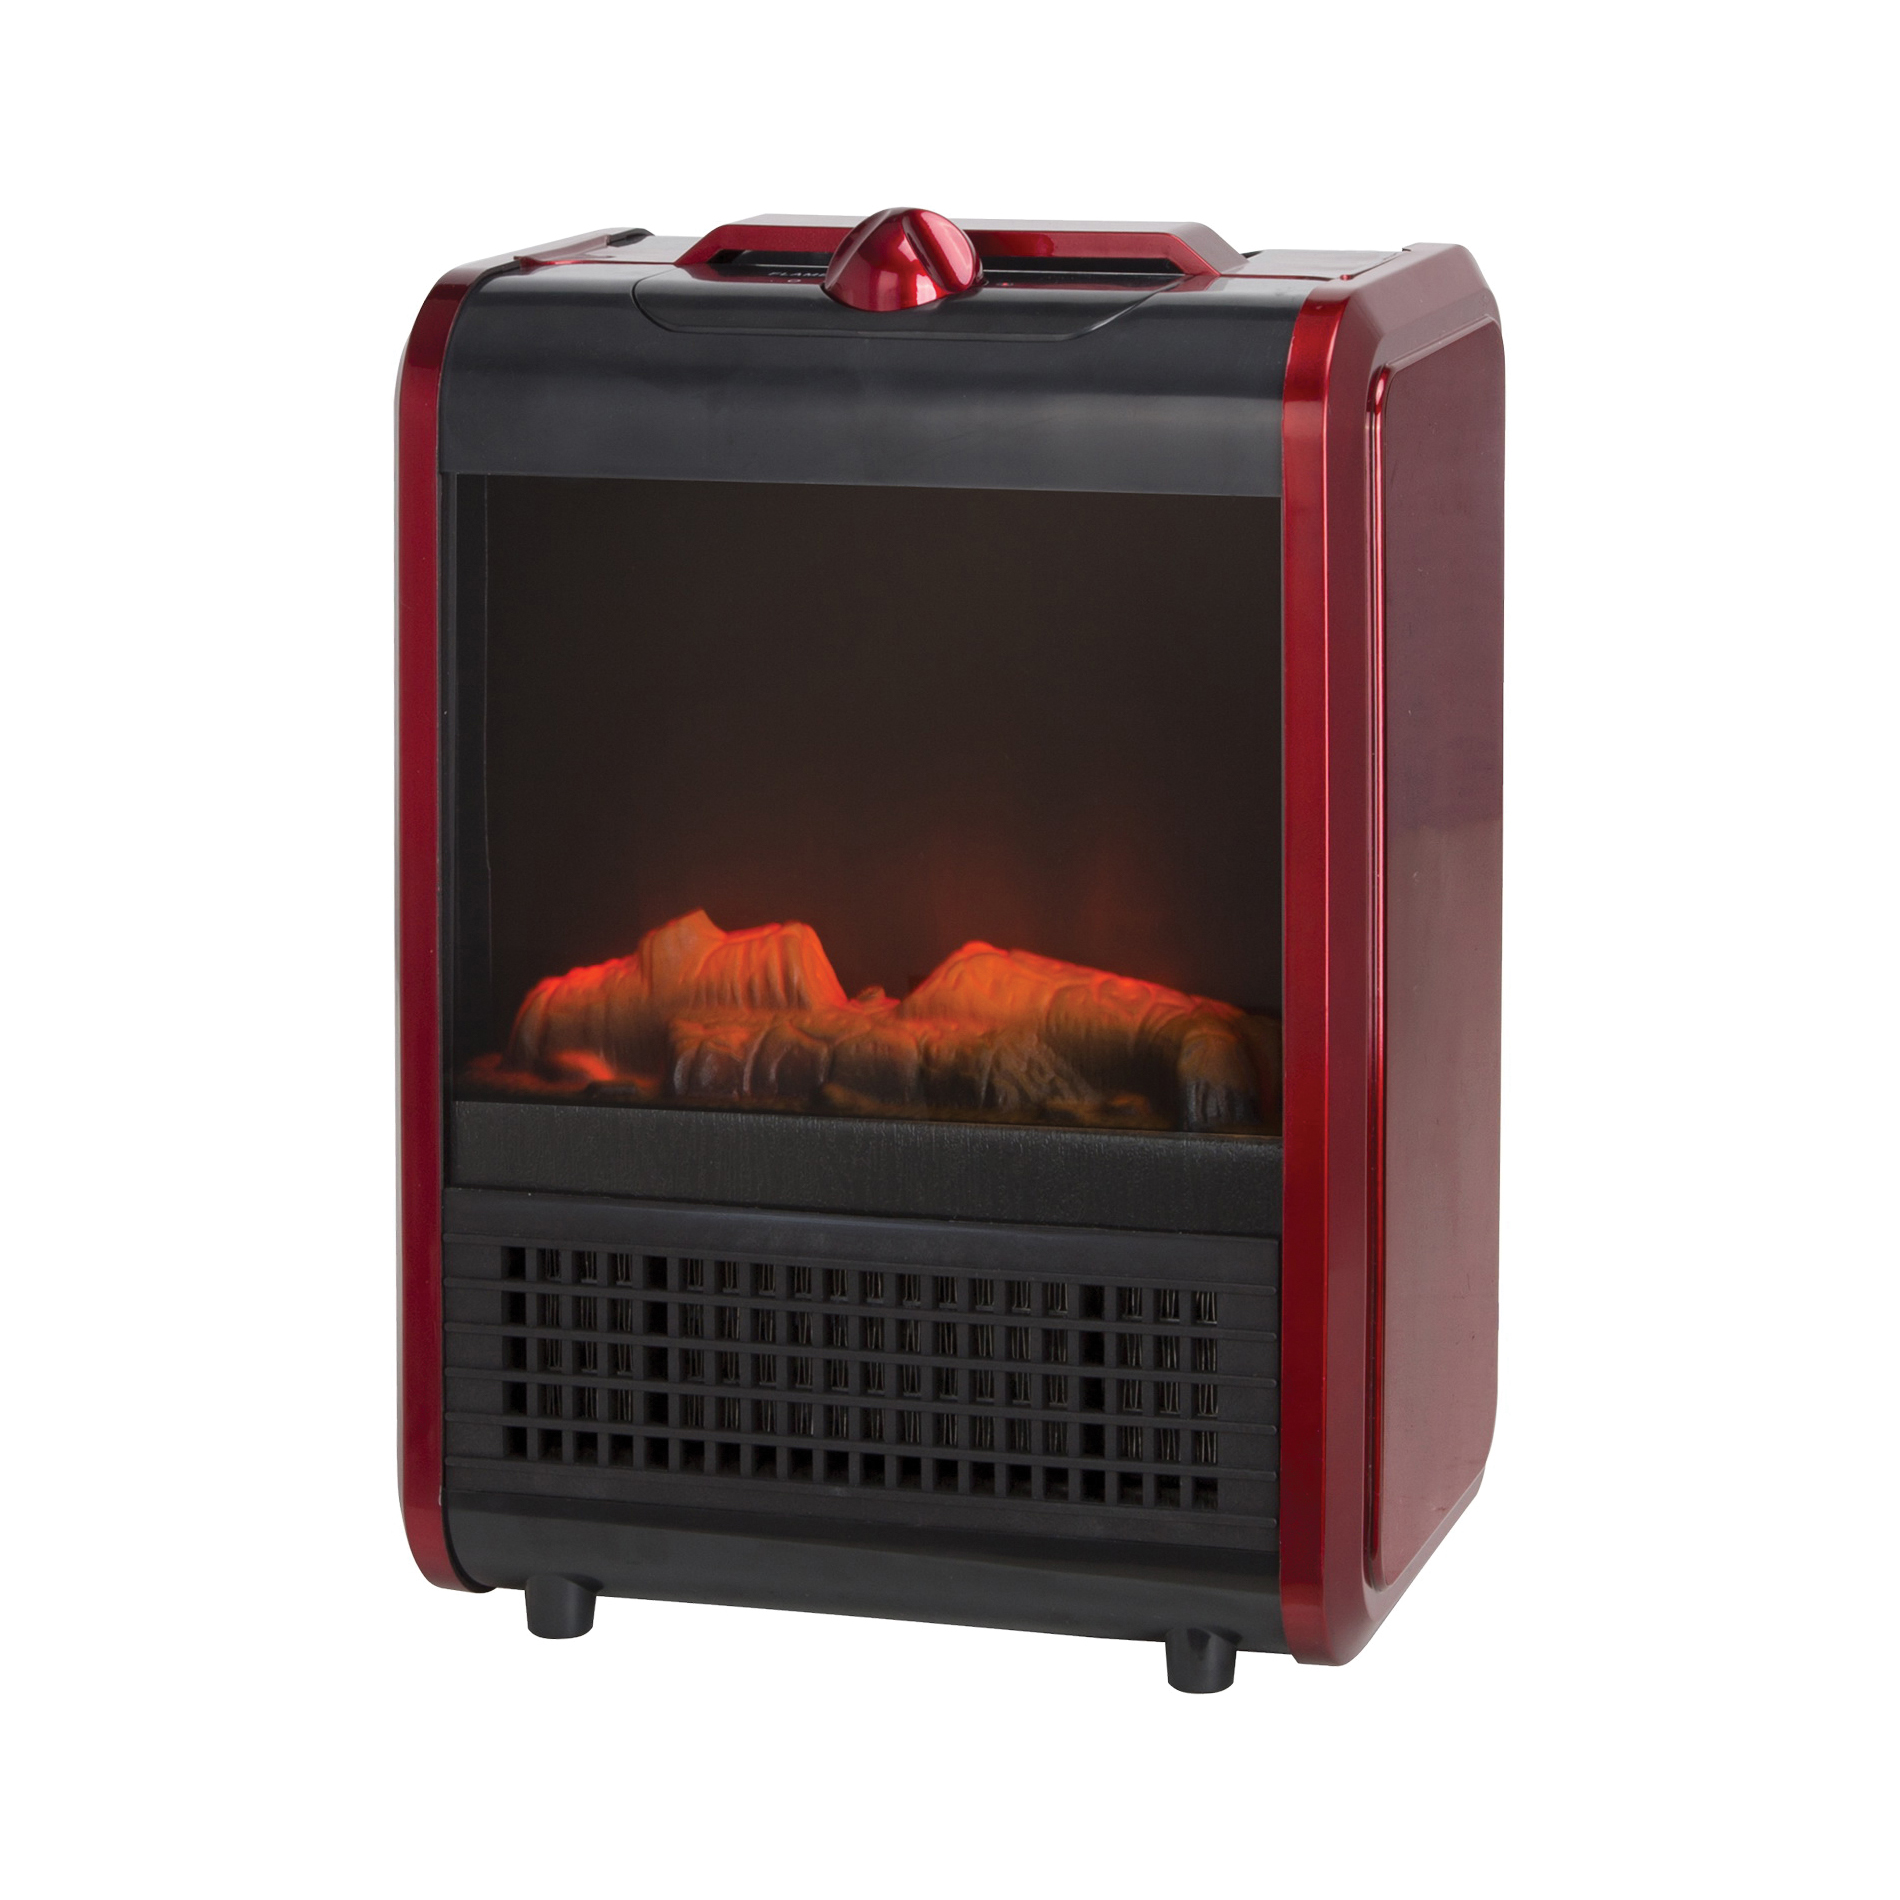 Ceramic PTC Heater 120V, 10 A, 120 V, 600/1200 W, 1200W Heating, 2-Heat Settings, Red